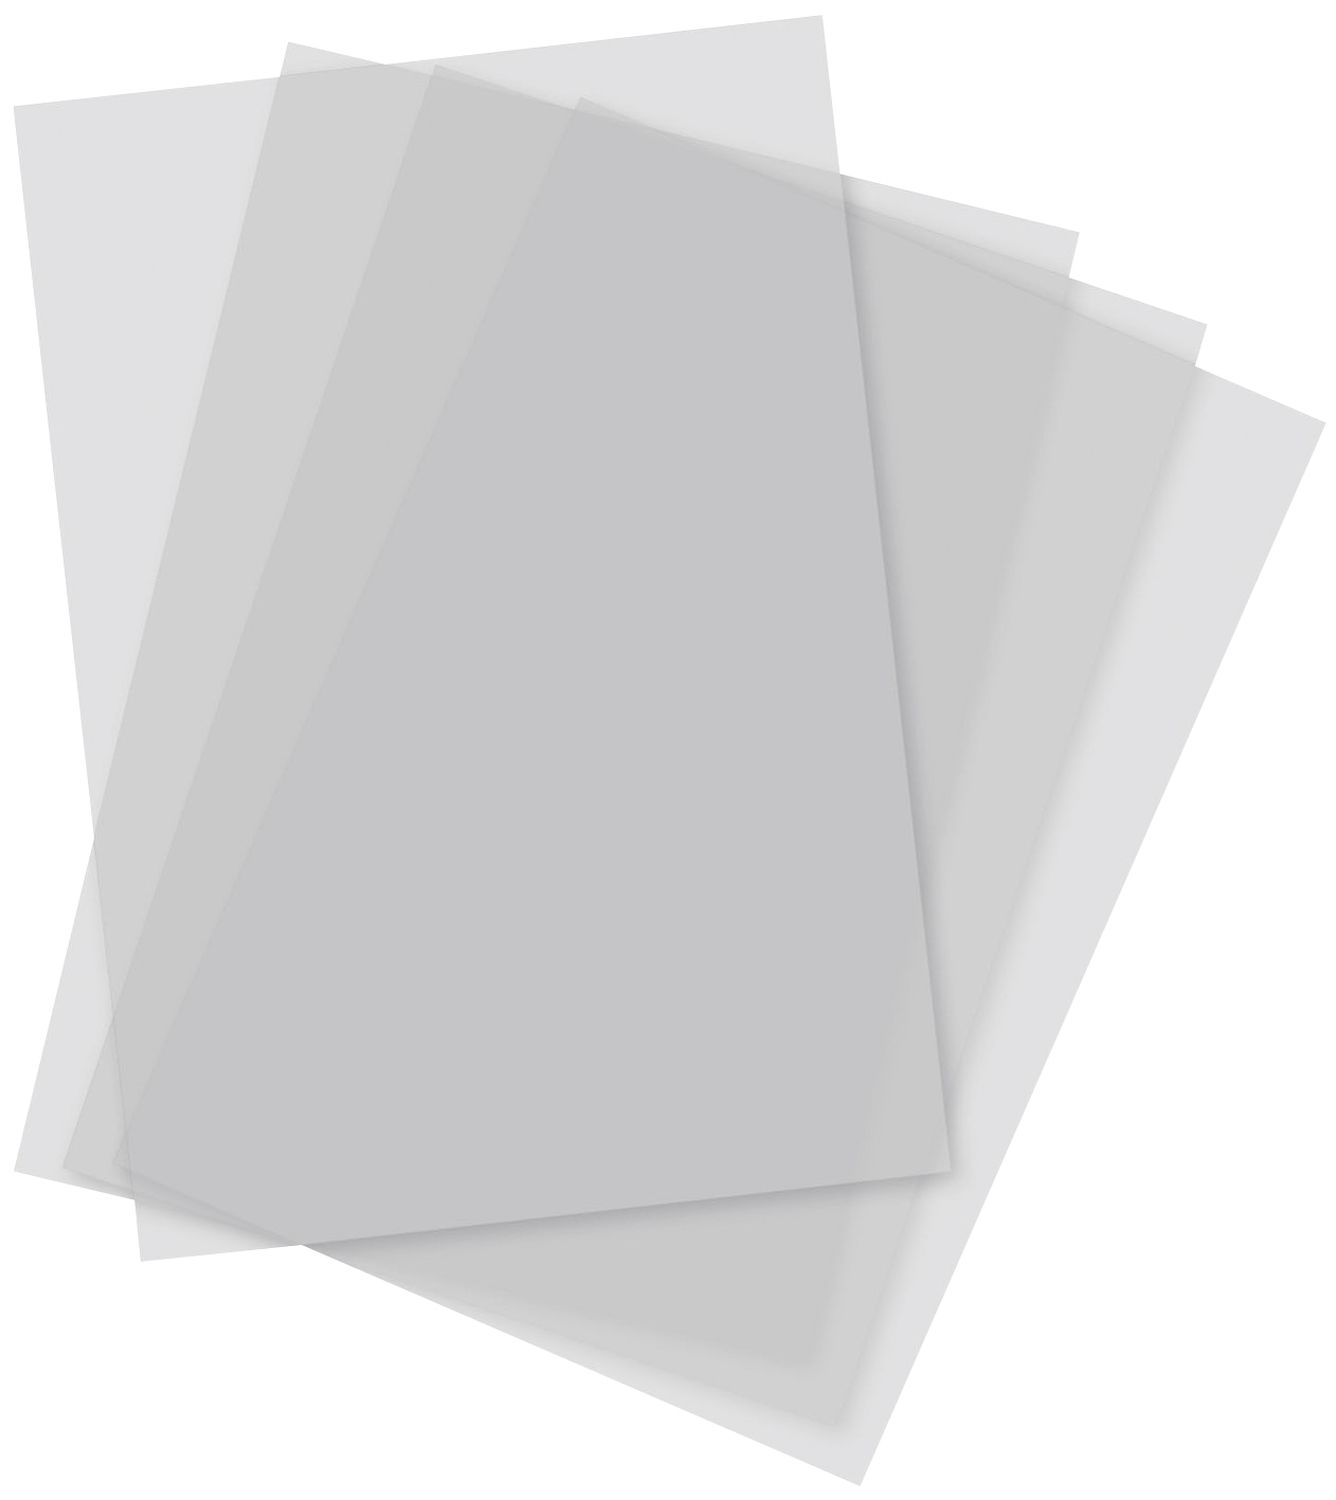 Transparentbogen - transparentes Zeichenpaier, 100 Blätter, A3, 90/95 g/qm